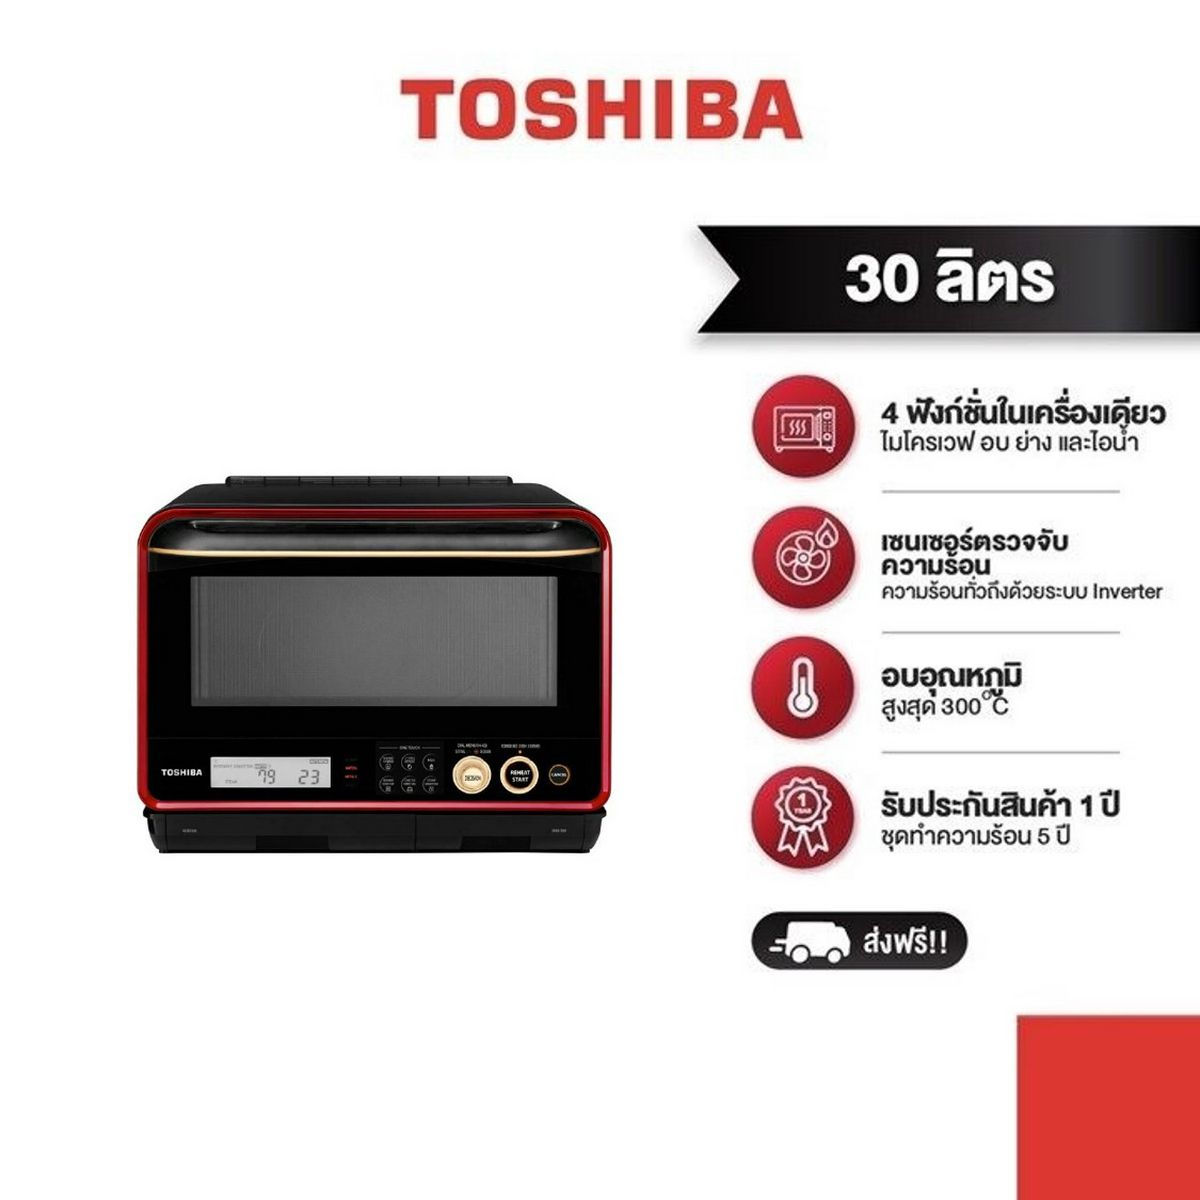 TOSHIBA เตาอบไมโครเวฟ รุ่น ER-ND300C(R) สีดำ 30 ลิตร ER-ND300C(R